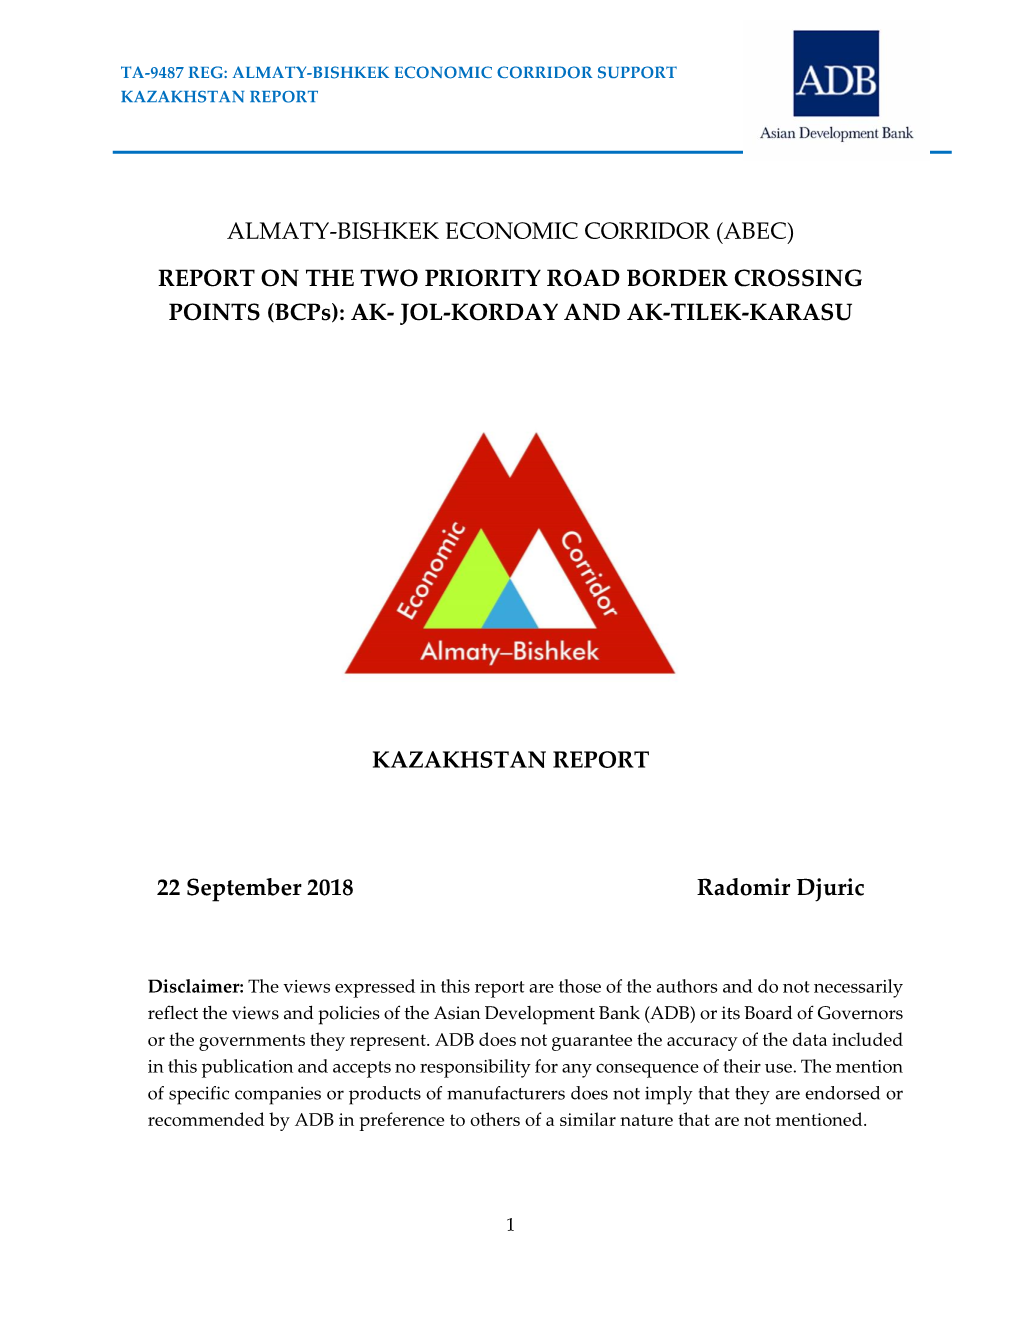 Report on the Two Priority Road Border Crossing Points: AK-JOL-KORDAY and AK-TILEK-KARASU